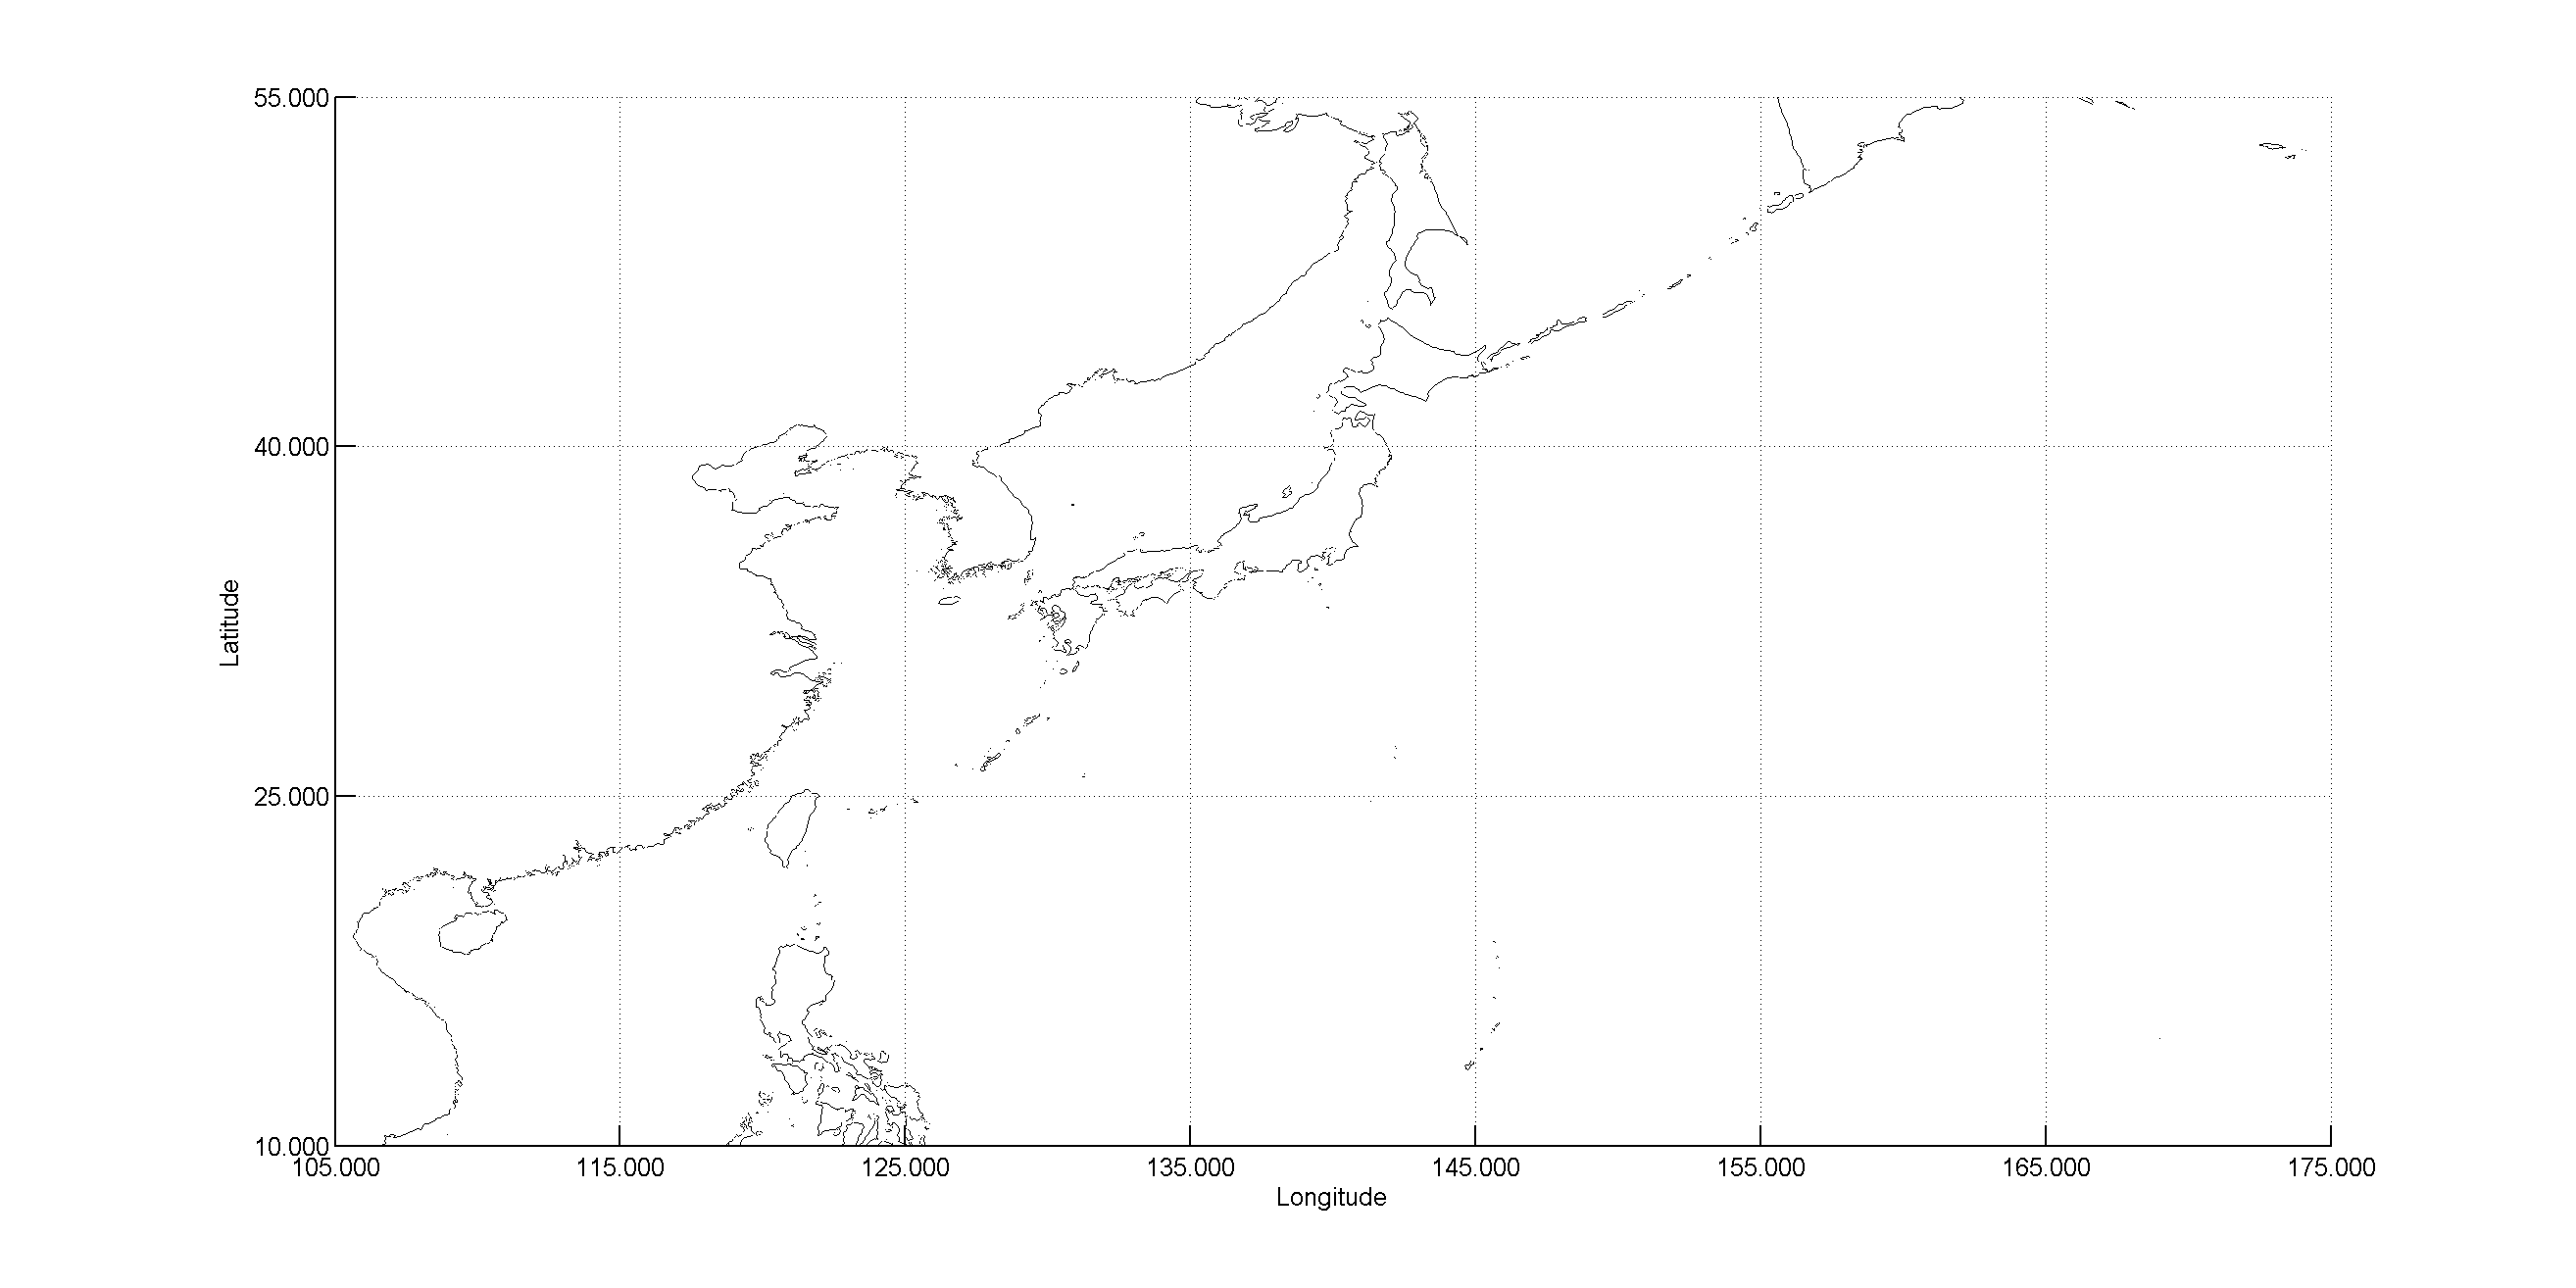 CYCLE_152 - Japan Descending passes